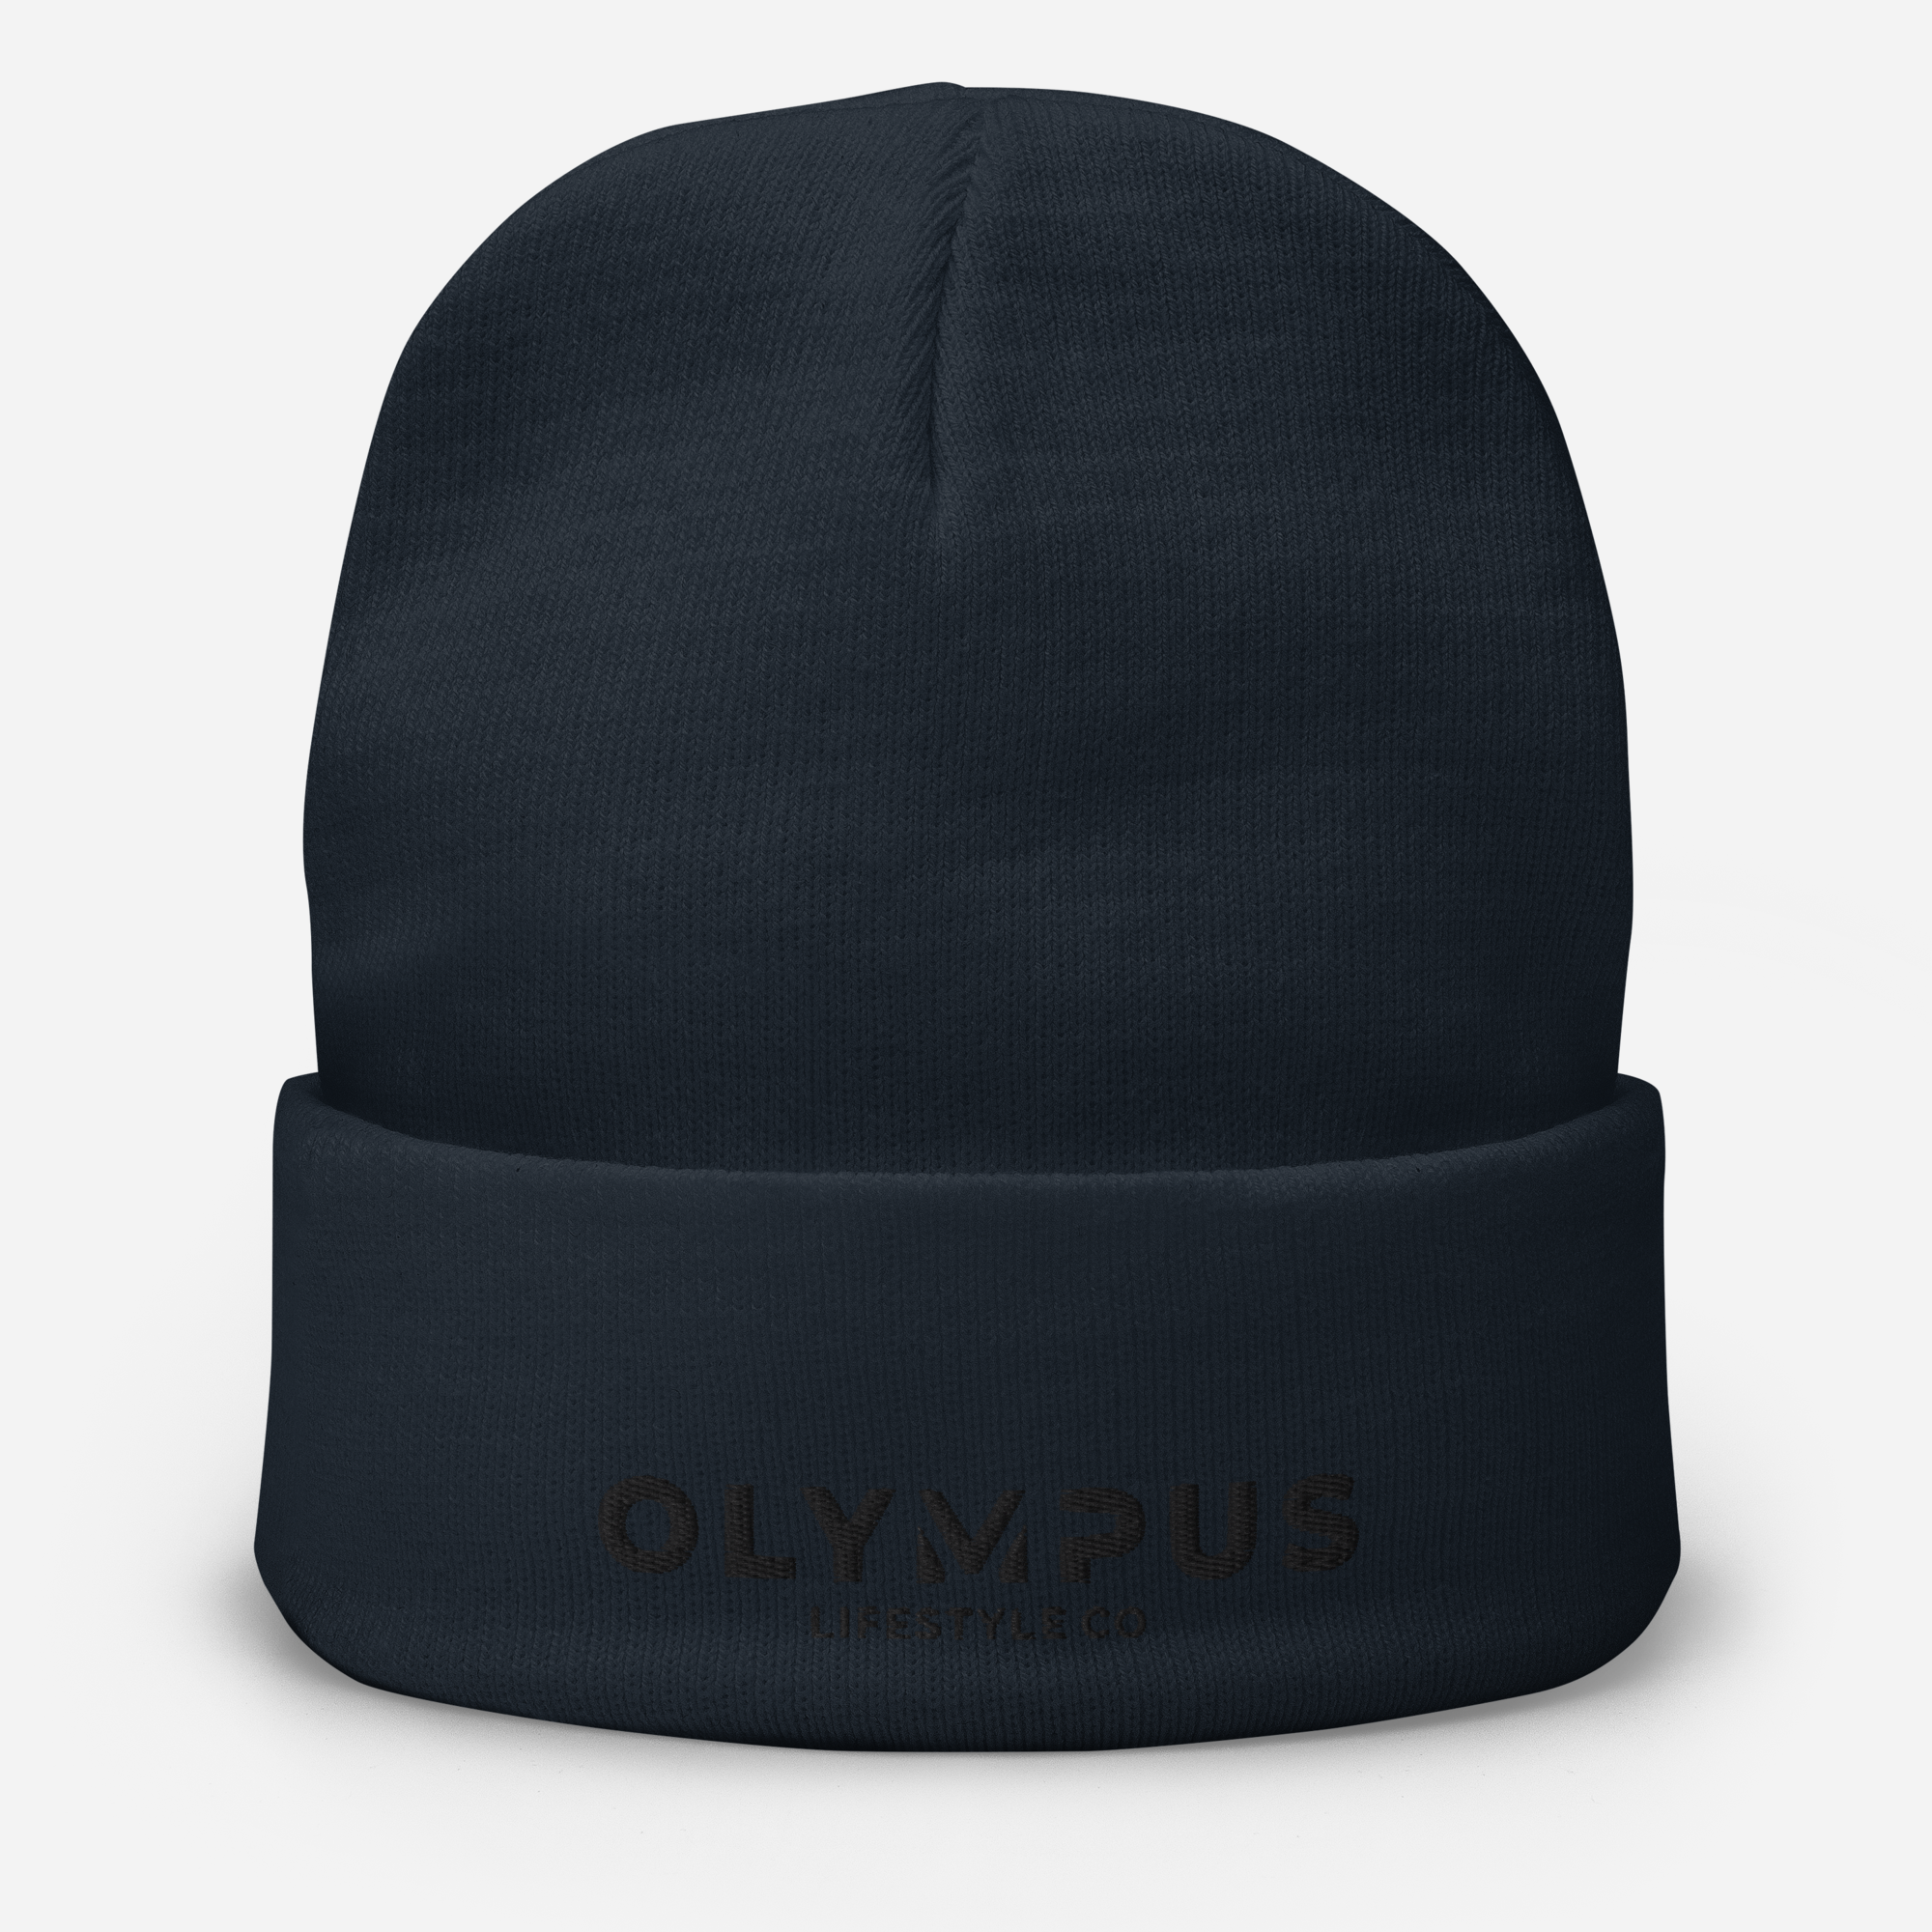 Olympus Beanie Black Logo